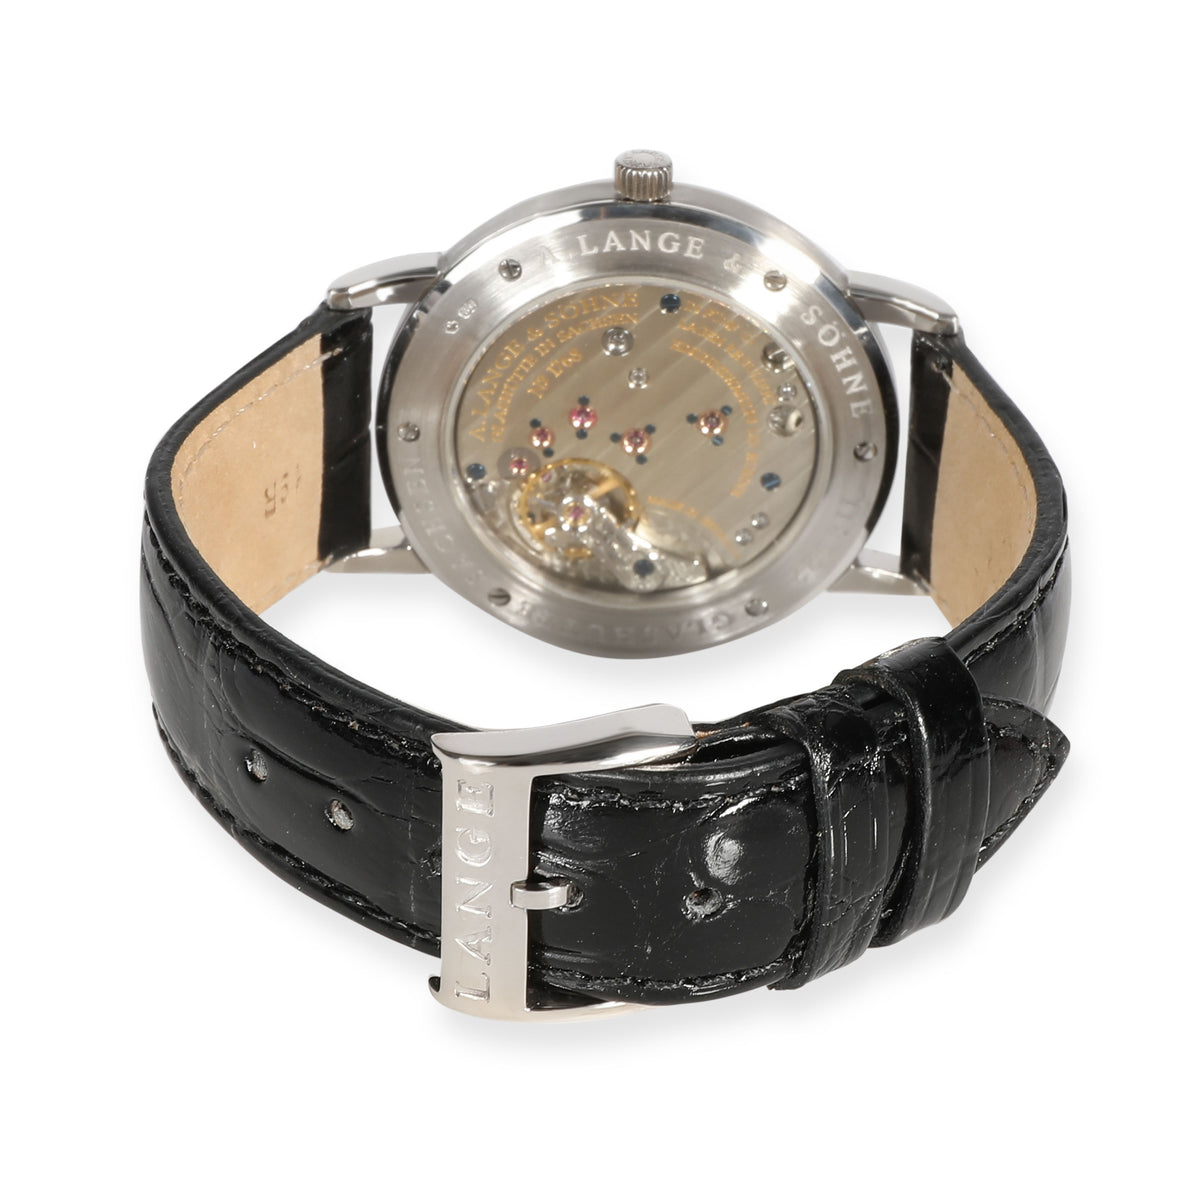 A. Lange & Sohne Saxonia 219.028 Men's Watch in 18kt White Gold